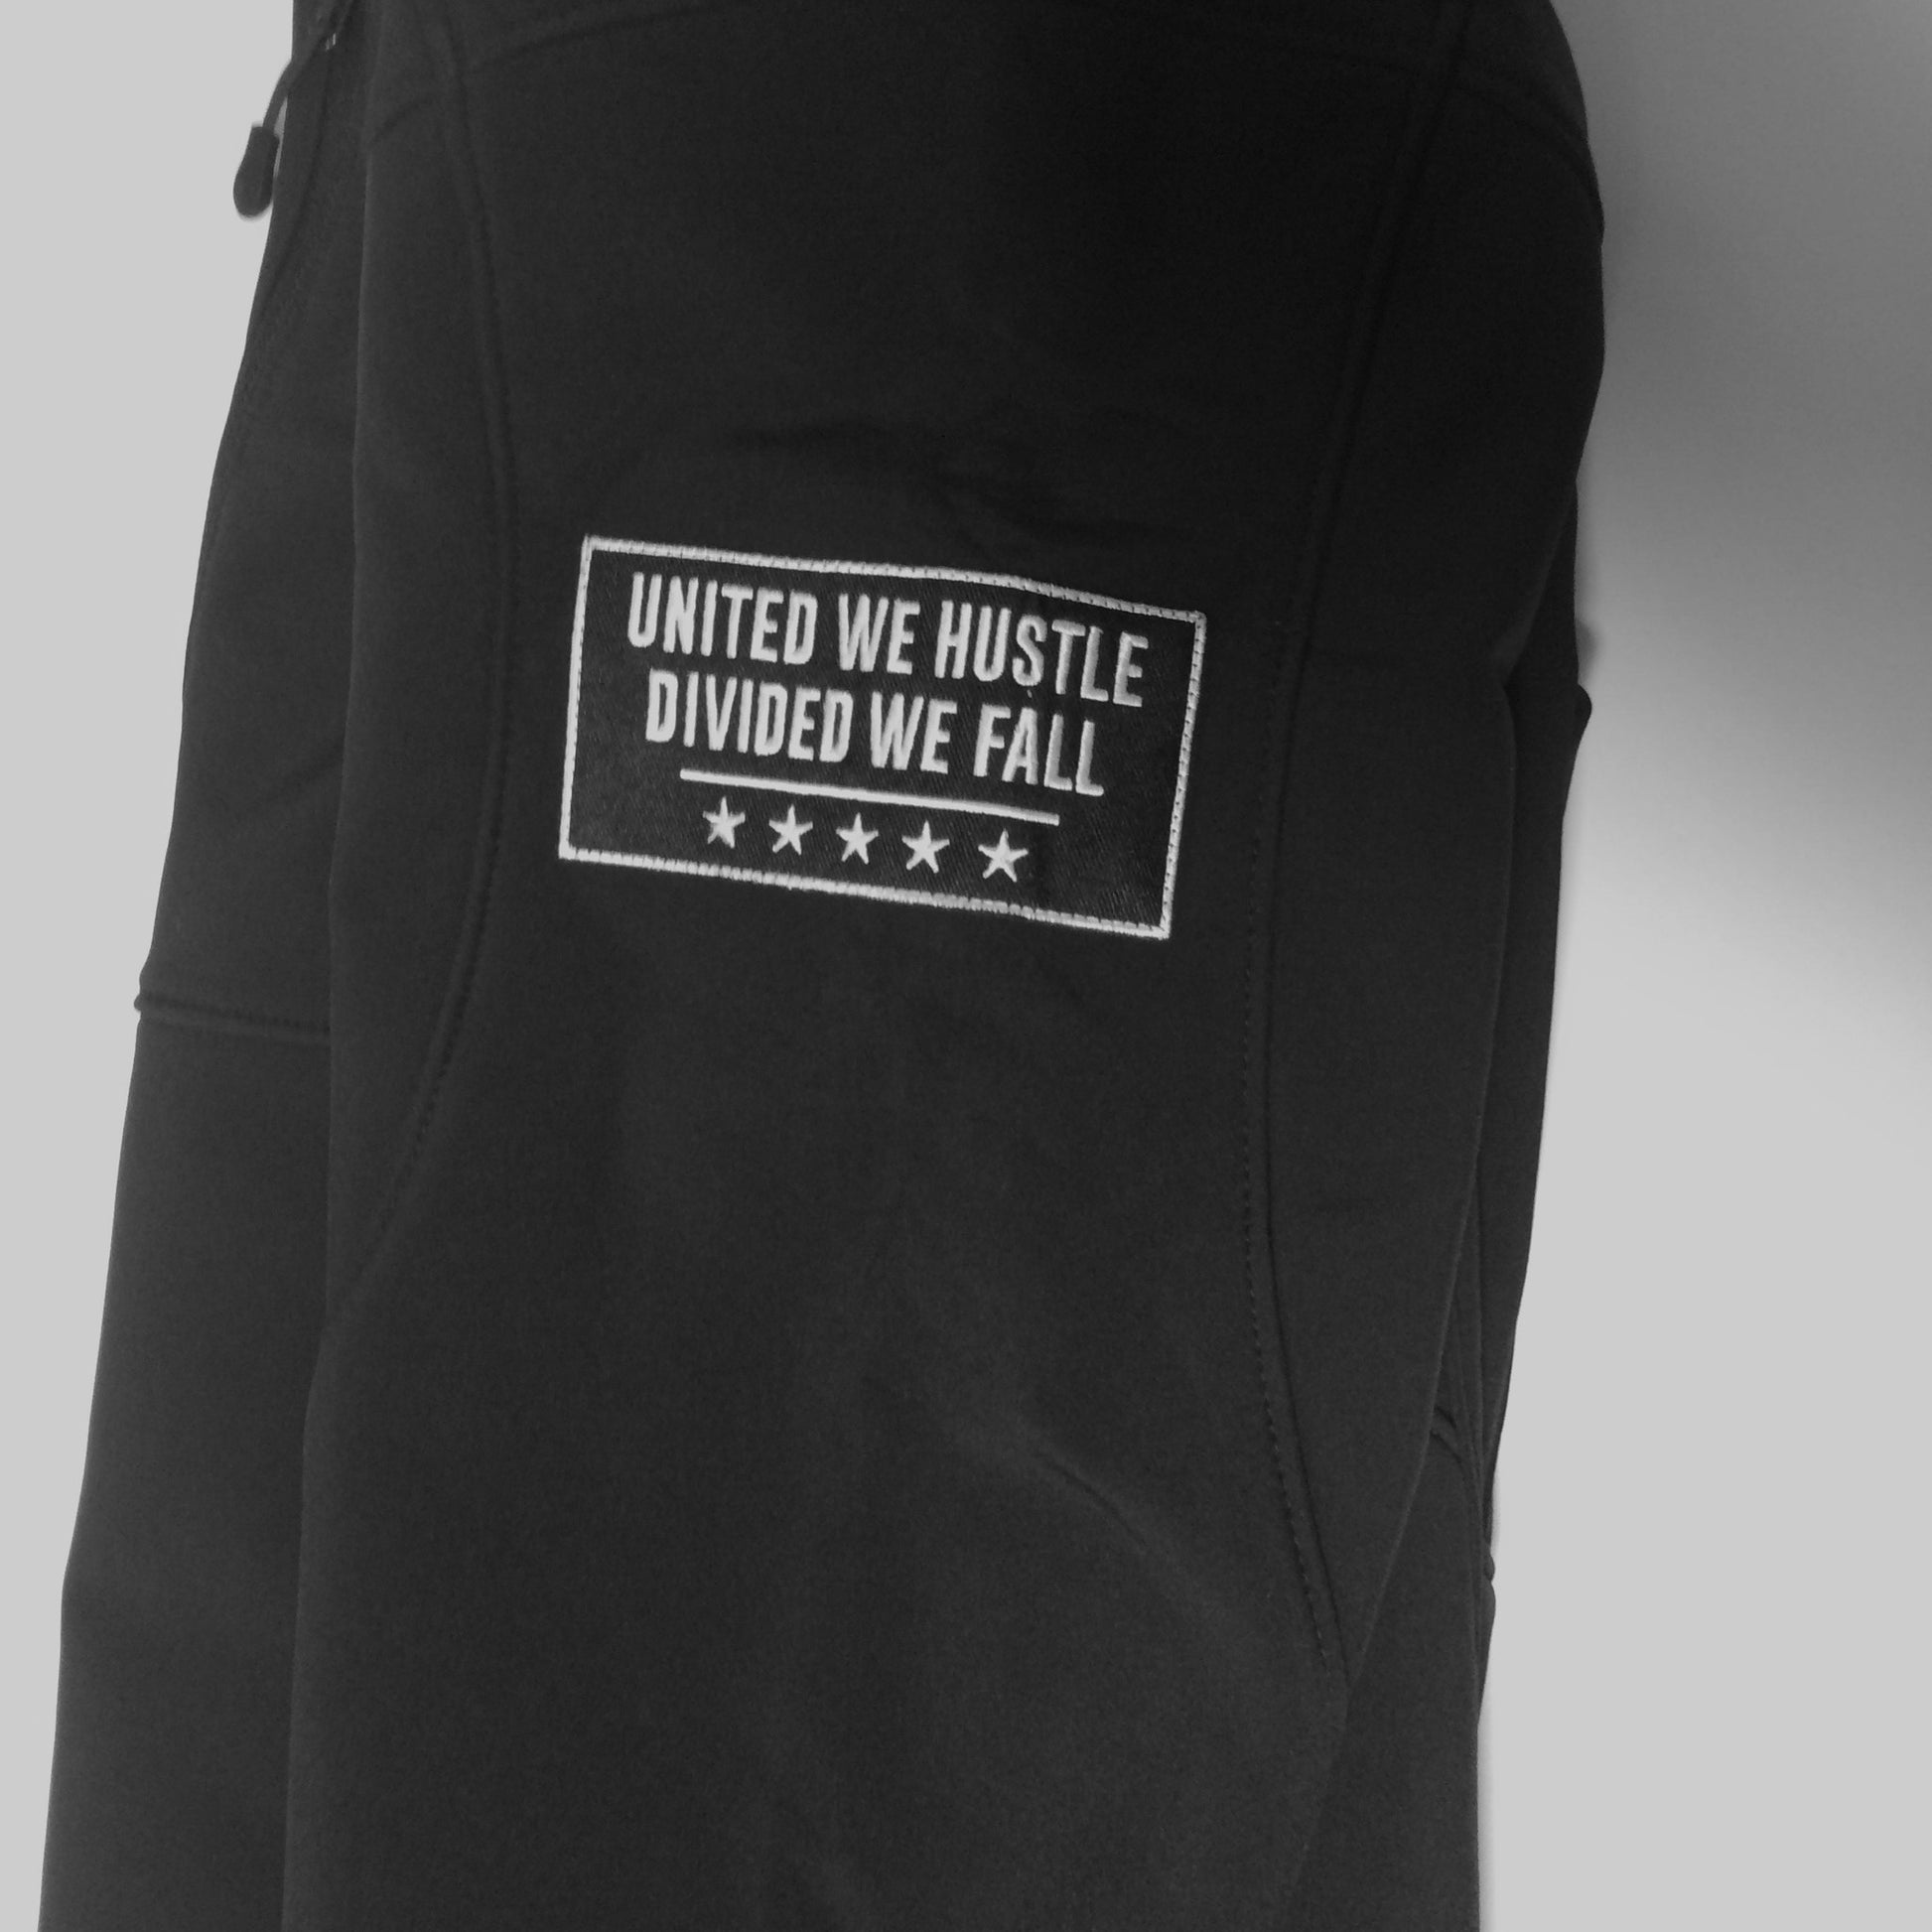 Limited Edition "UNITED WE HUSTLE" Premium Jackets